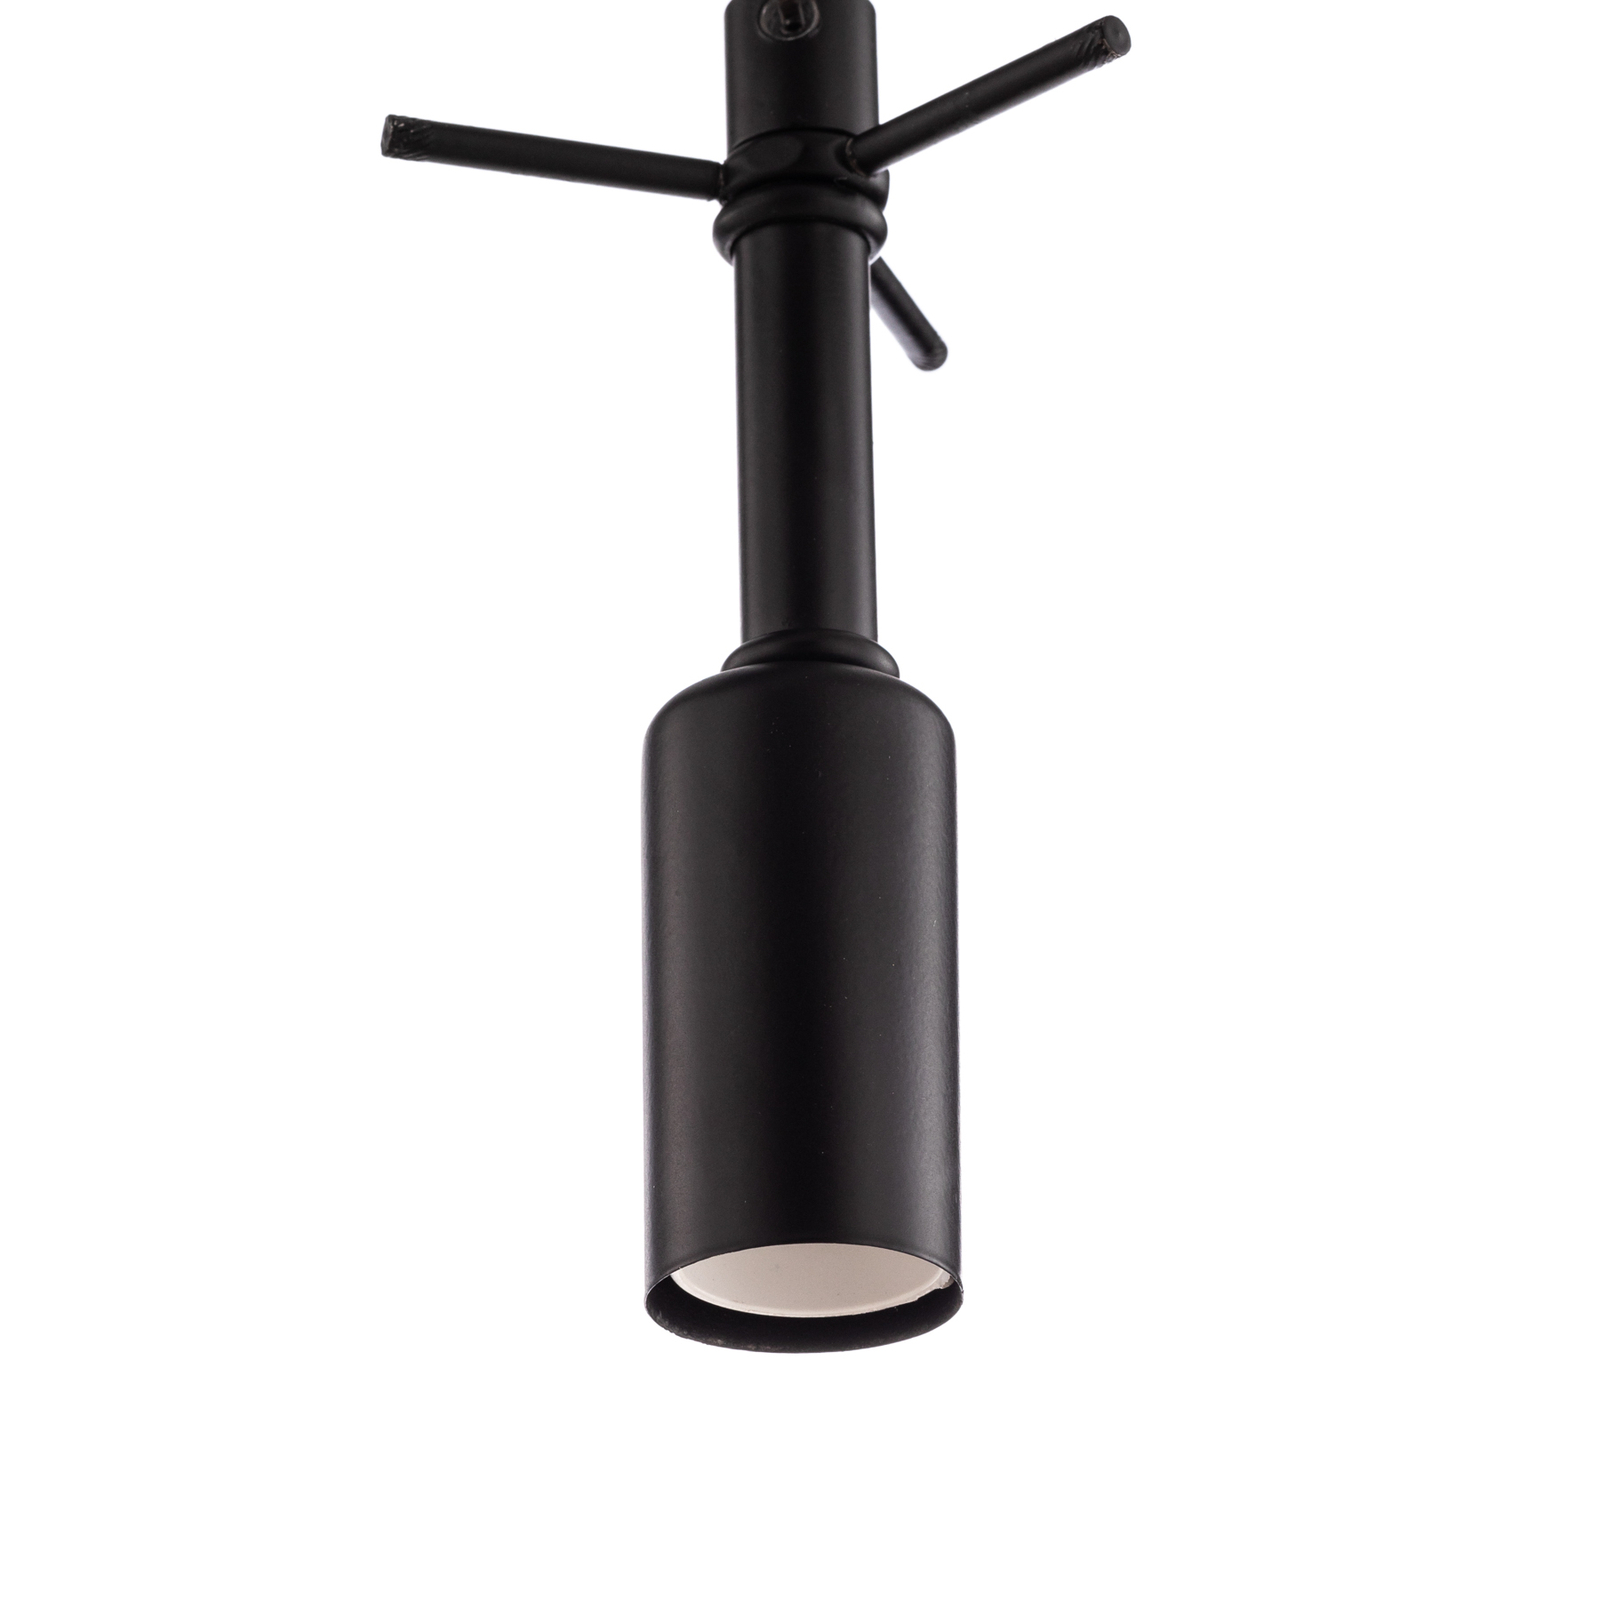 Hanglamp AV-7002-1697-9Y-BSY in lange vorm